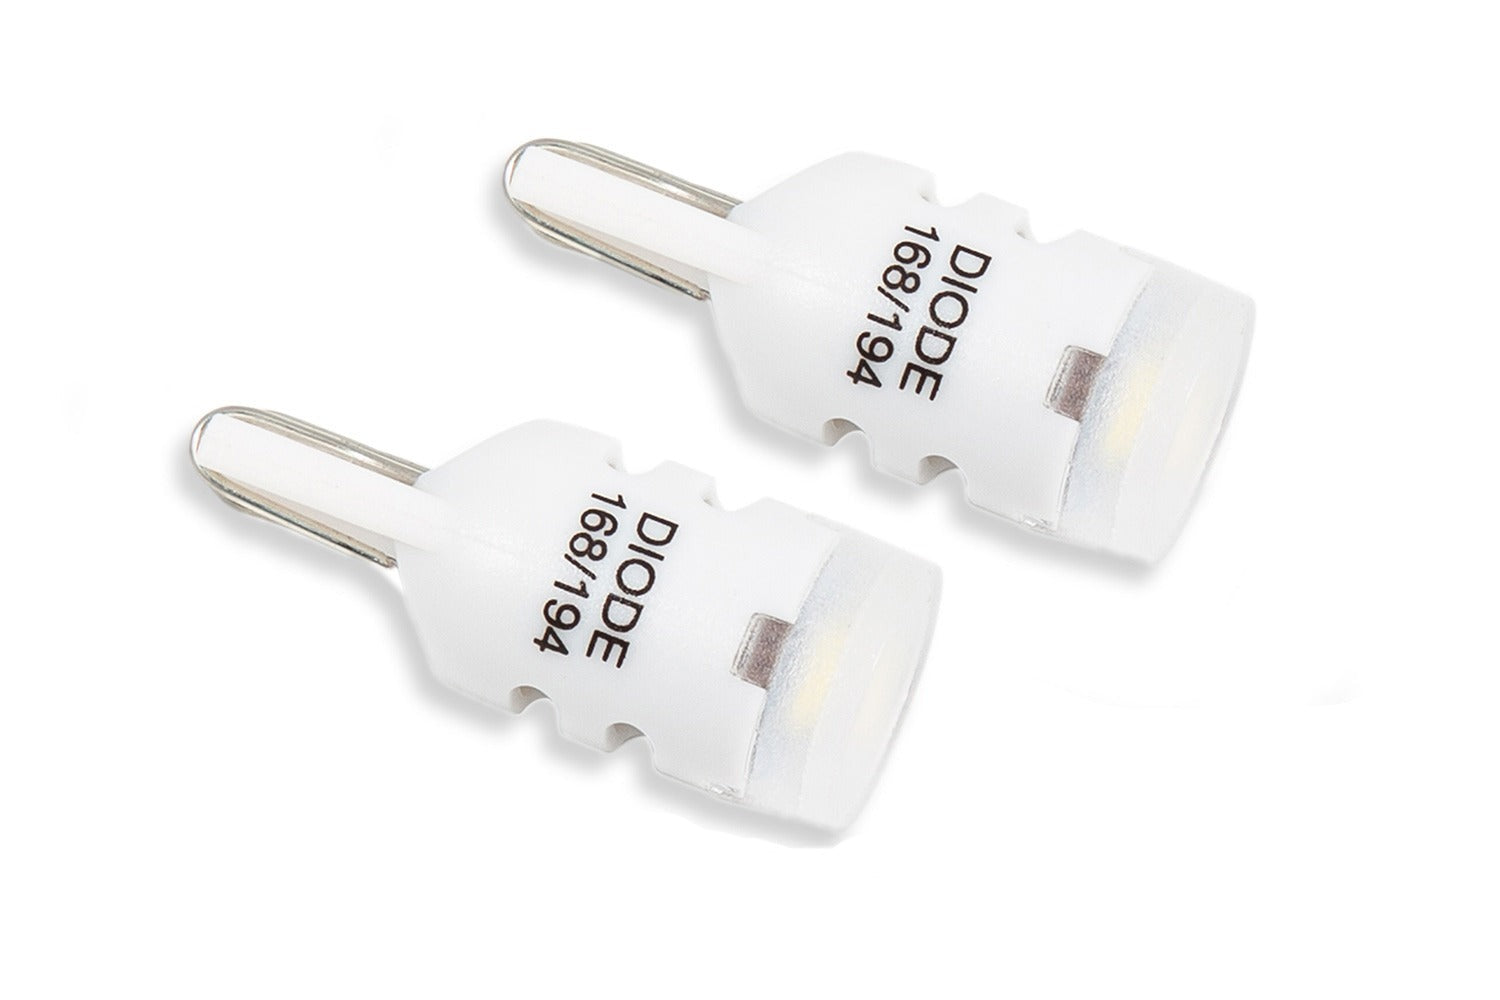 194 LED Bulb HP3 LED Warm White Pair Diode Dynamics